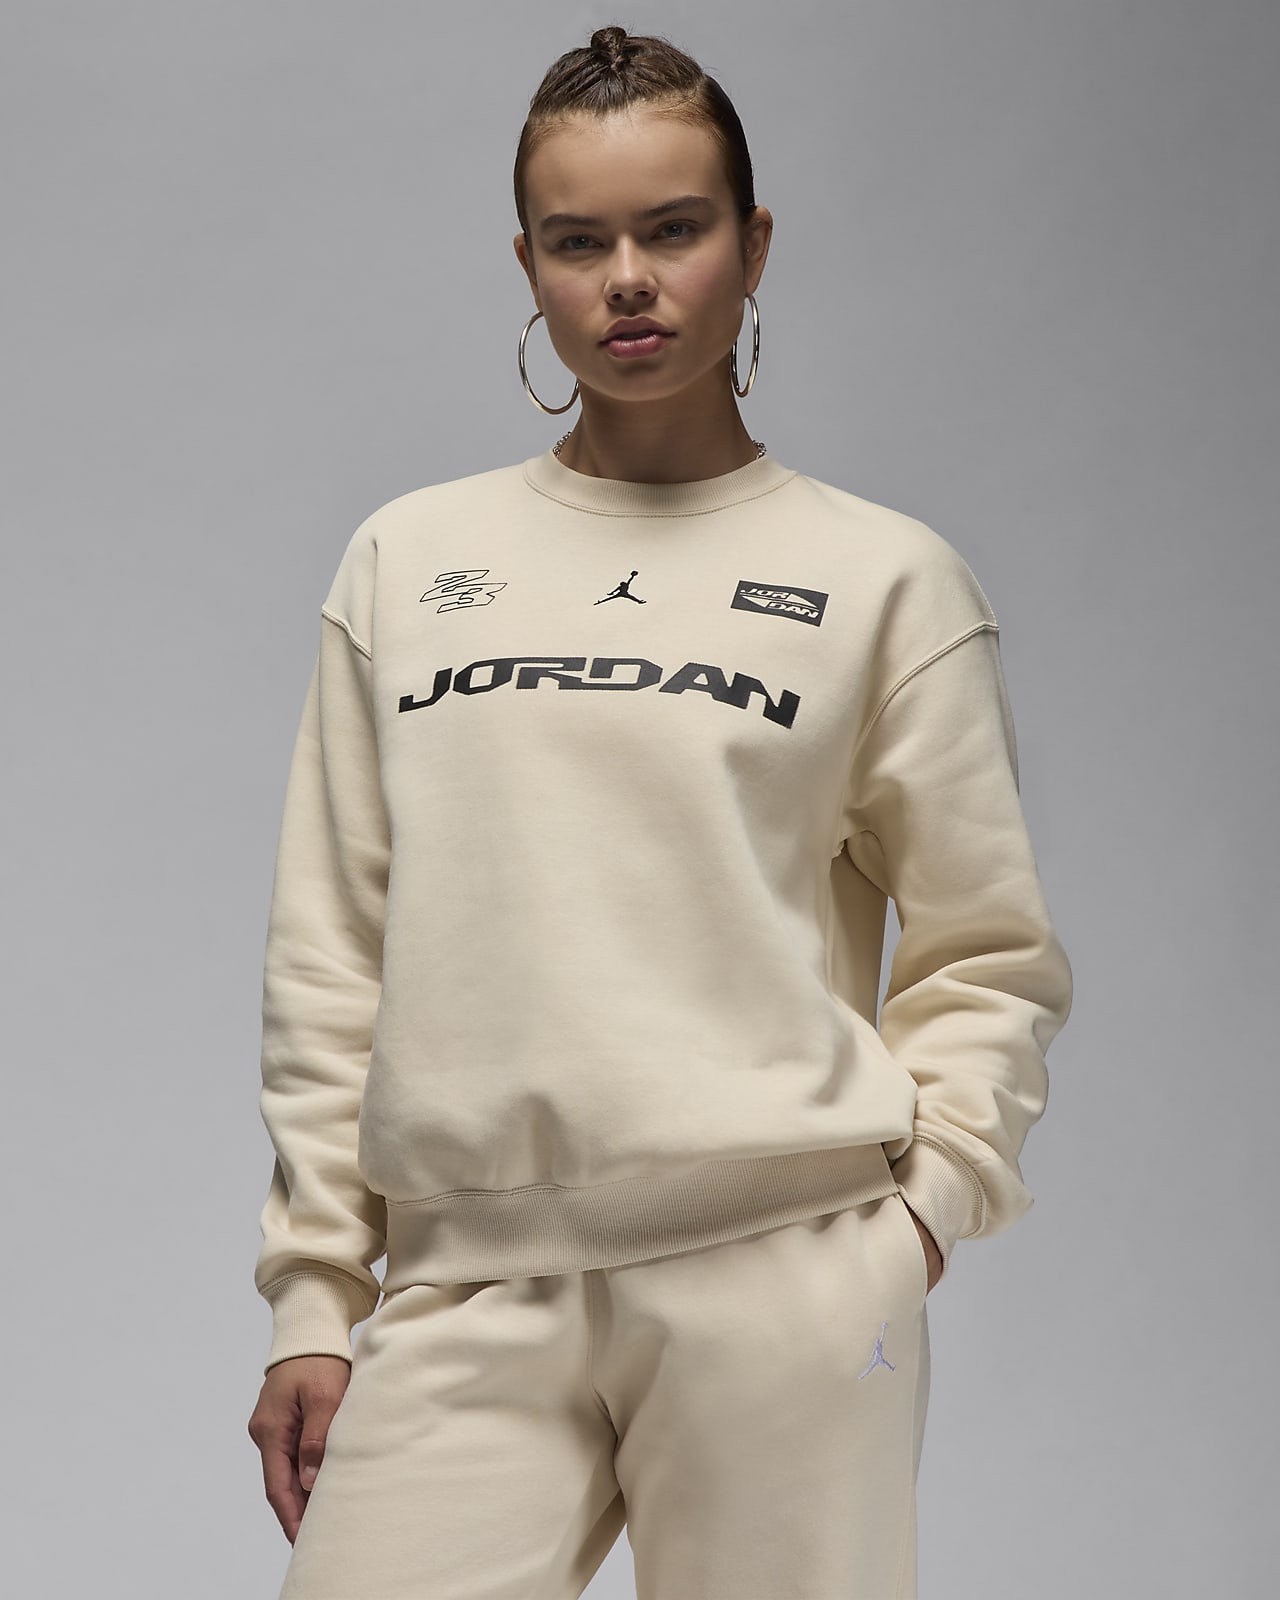 Jordan Brooklyn Fleece Damen-Sweatshirt mit Rundhalsausschnitt